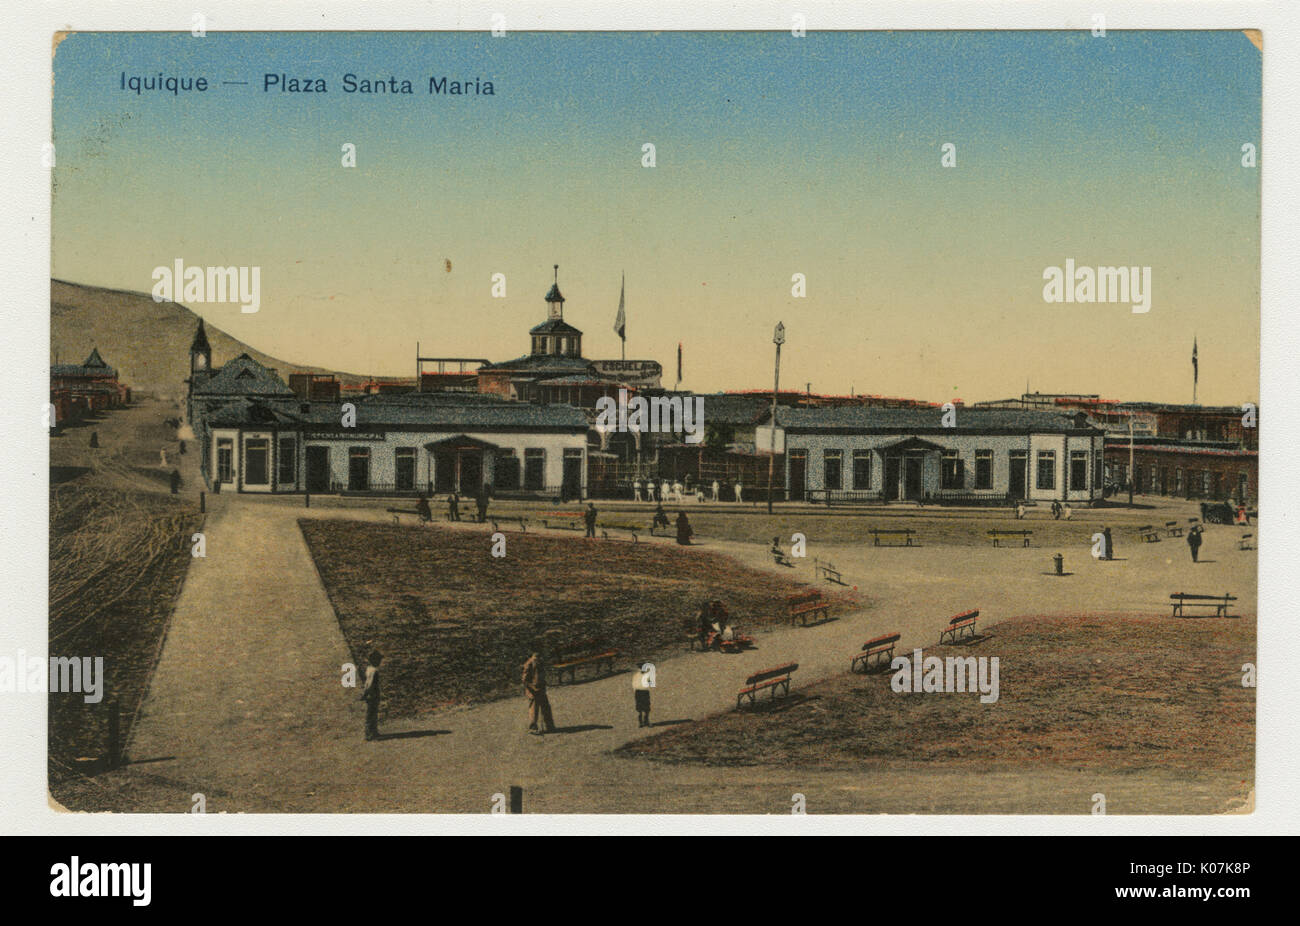 Plaza Santa Maria, Iquique, Tarapaca, Chile, South America Stock Photo